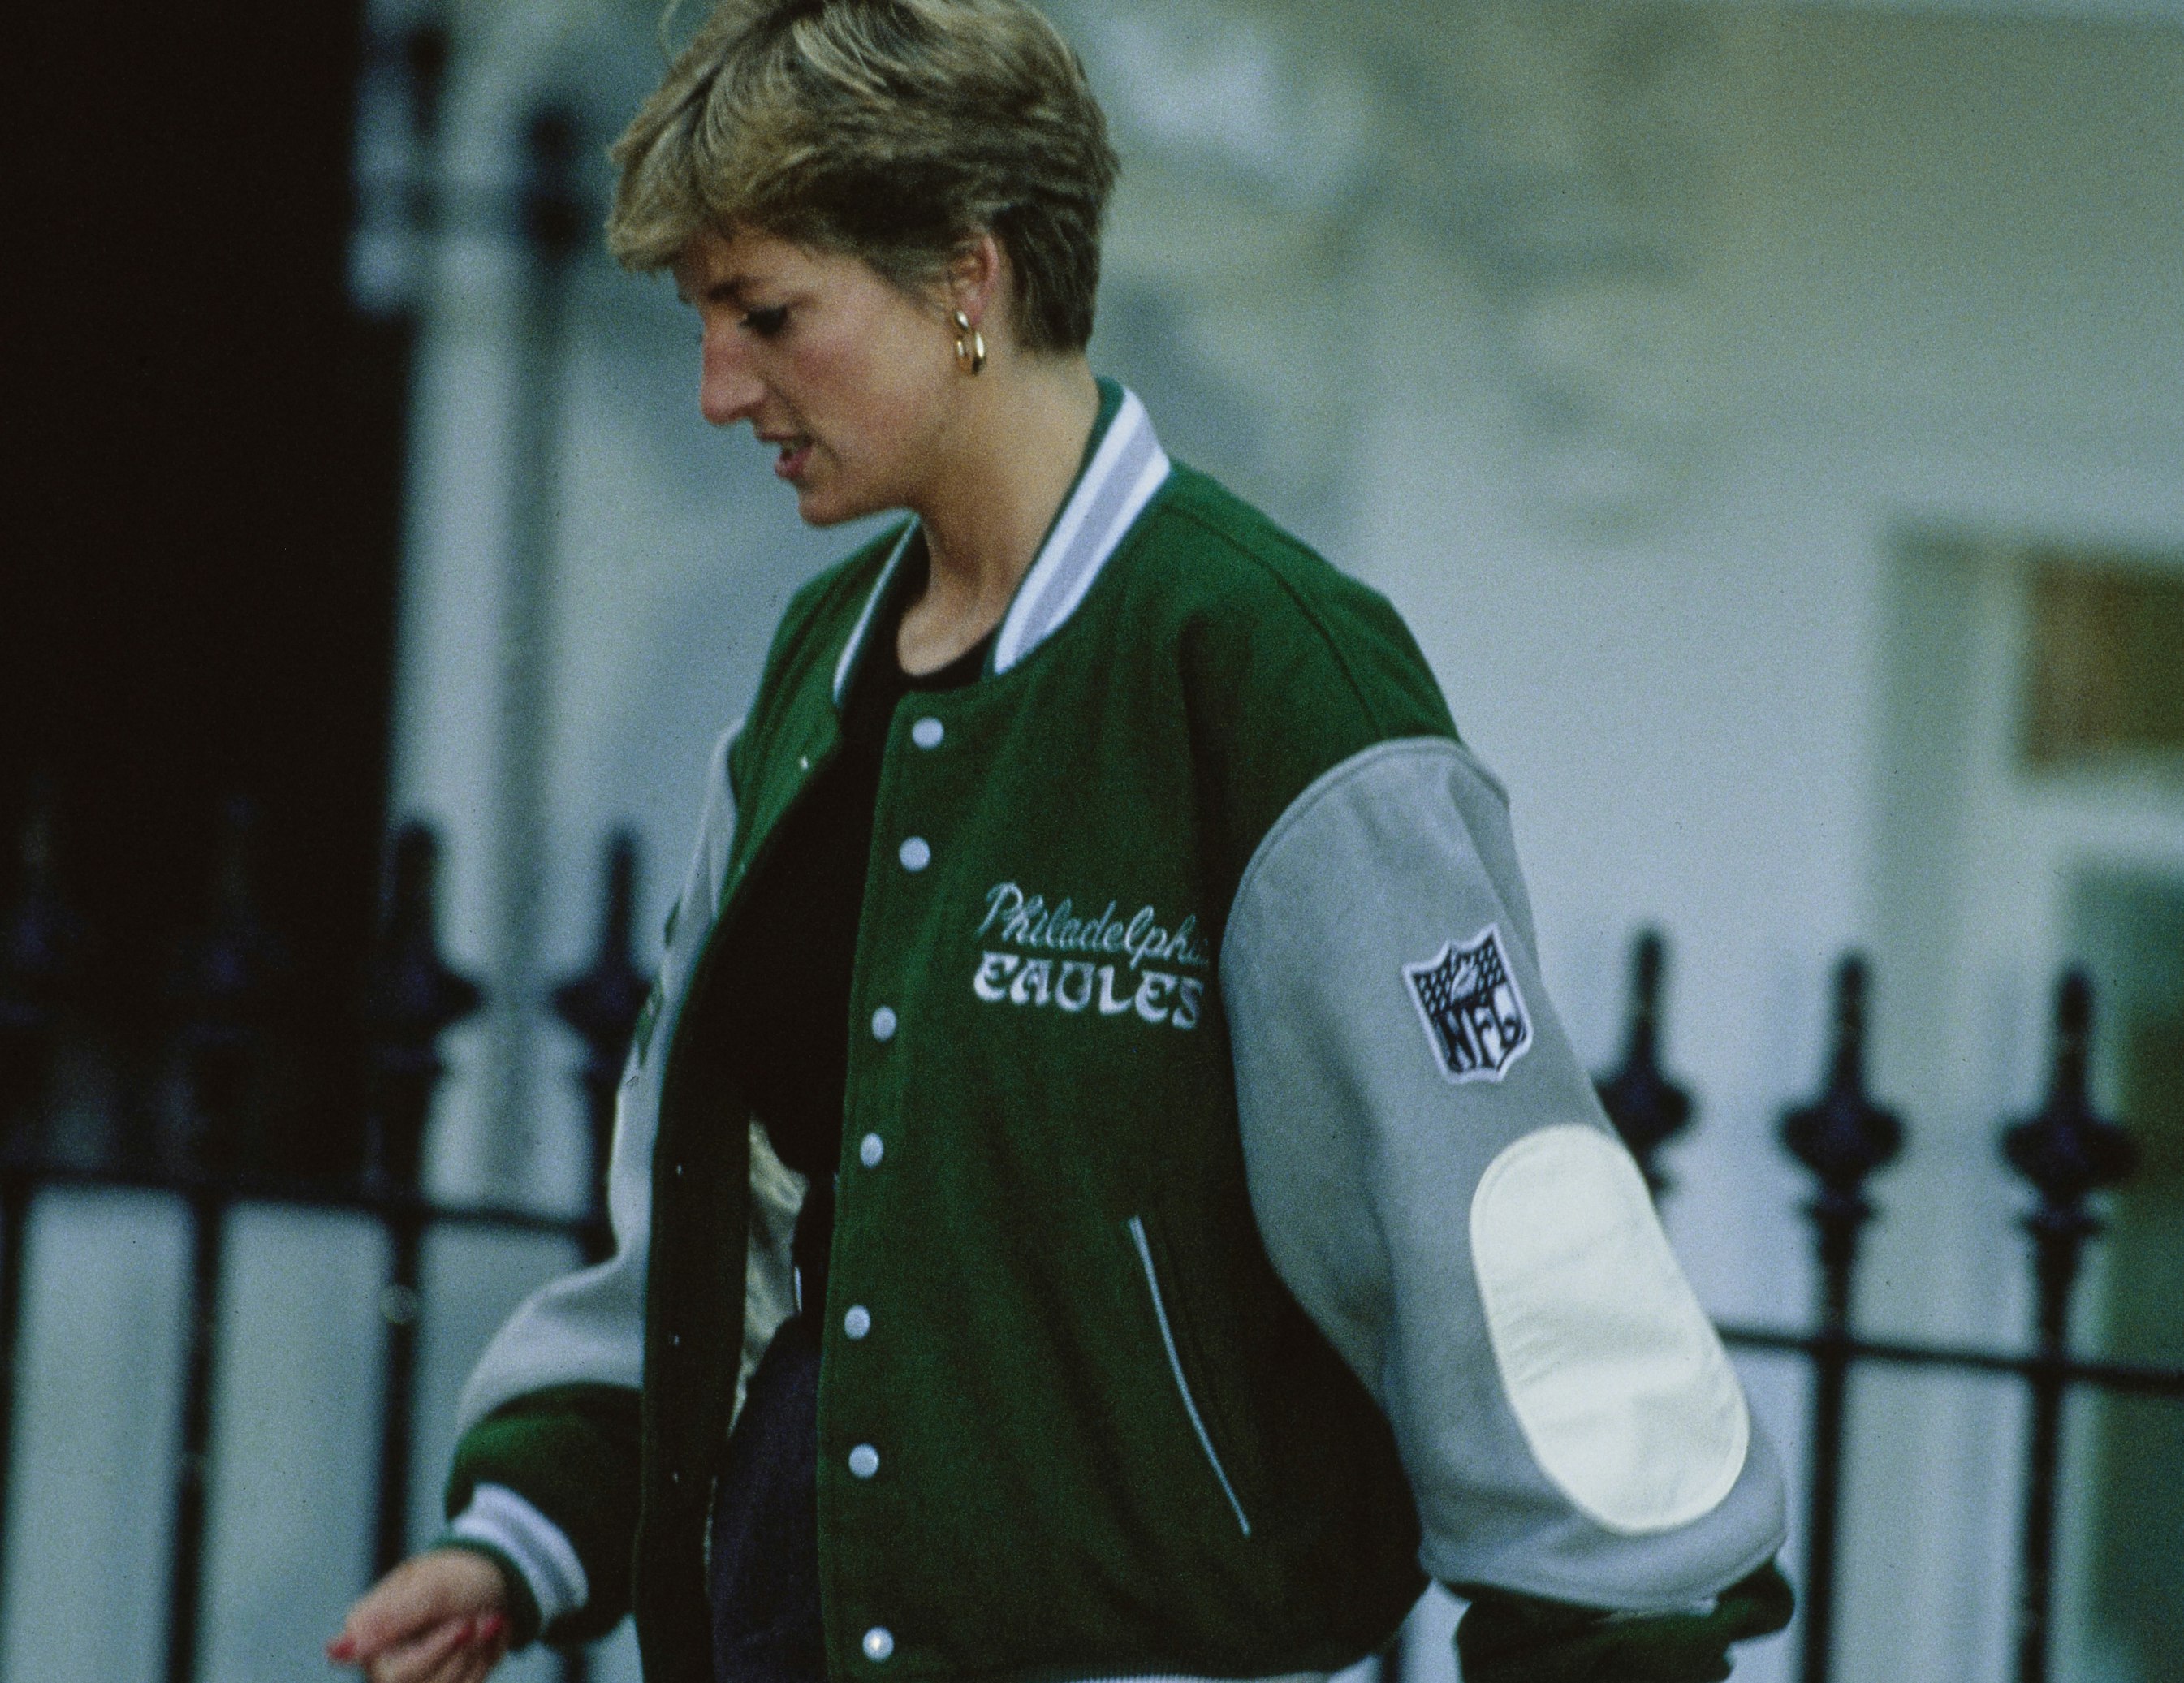 Princess Diana Philadelphia Eagles vintage varsity jacket: Don't